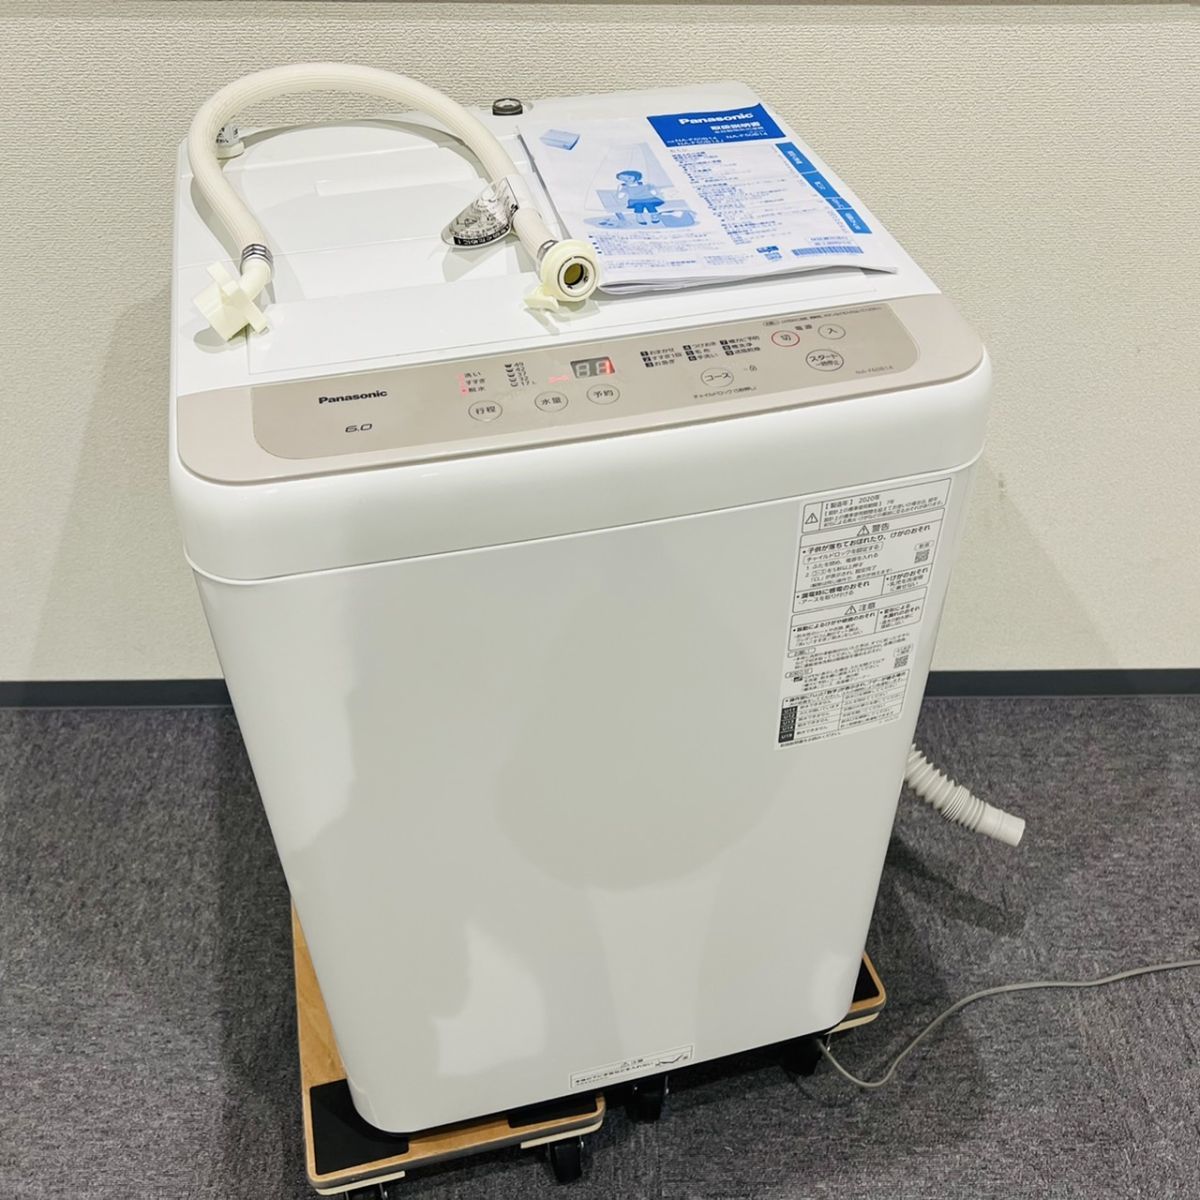 R869-I30-2701【引取限定】 Panasonic パナソニック 全自動電気洗濯機